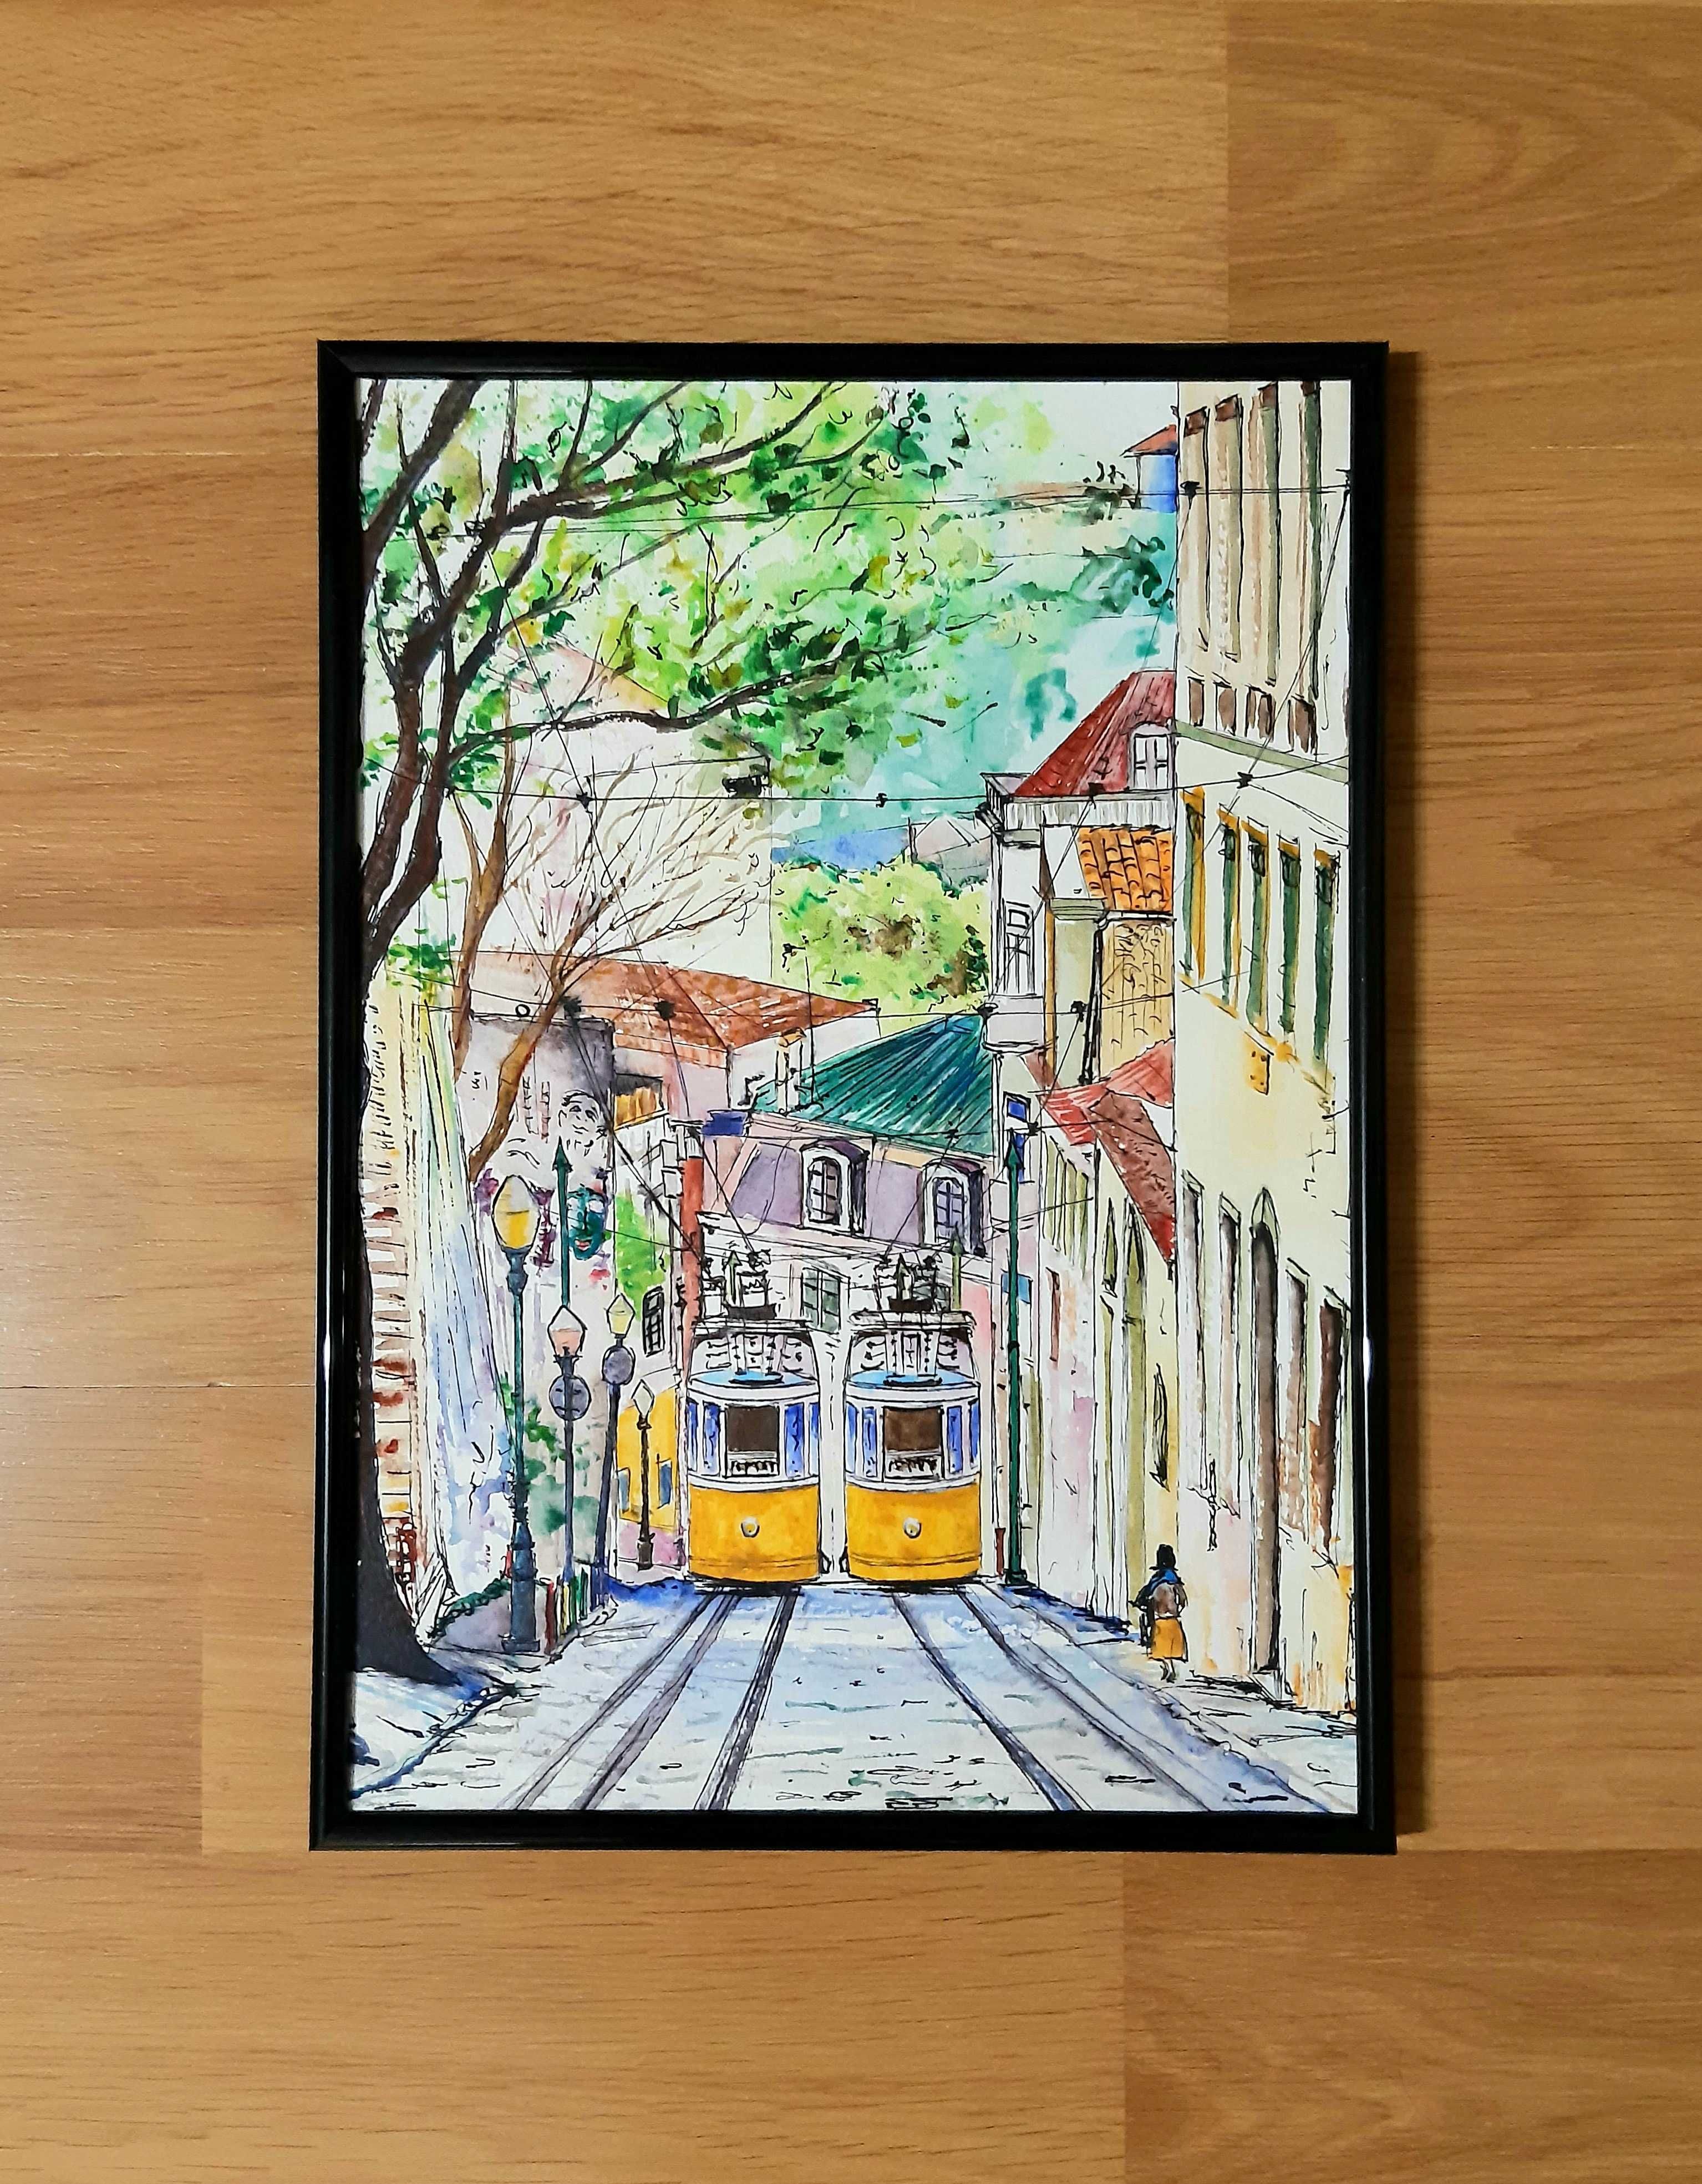 Tablou pictura manuala A4 - peisaj urban citadin Lisabona, Portugalia